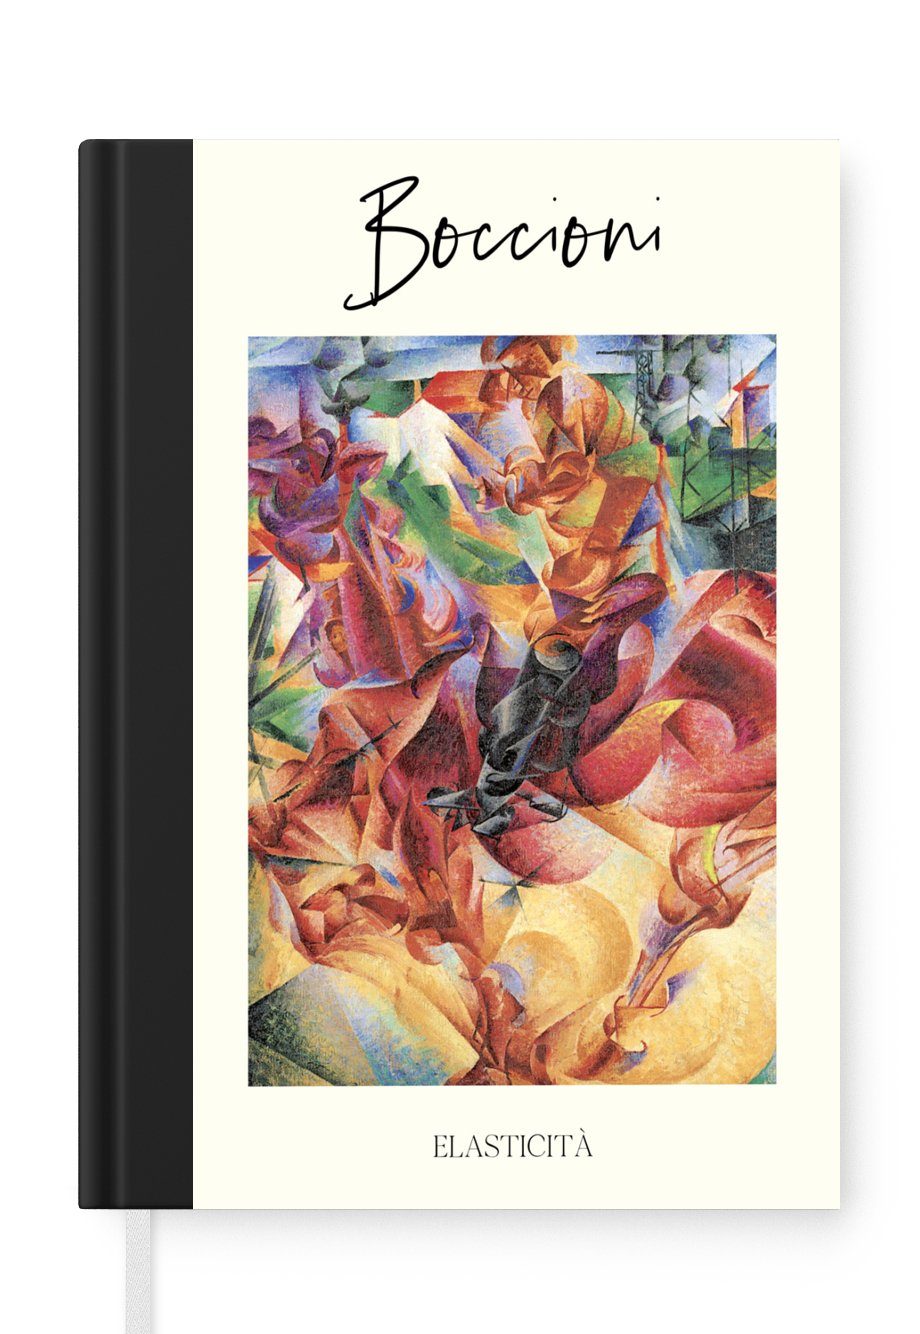 MuchoWow Notizbuch Kunst - Malerei - Umberto Boccioni - Elasticità, Journal, Merkzettel, Tagebuch, Notizheft, A5, 98 Seiten, Haushaltsbuch